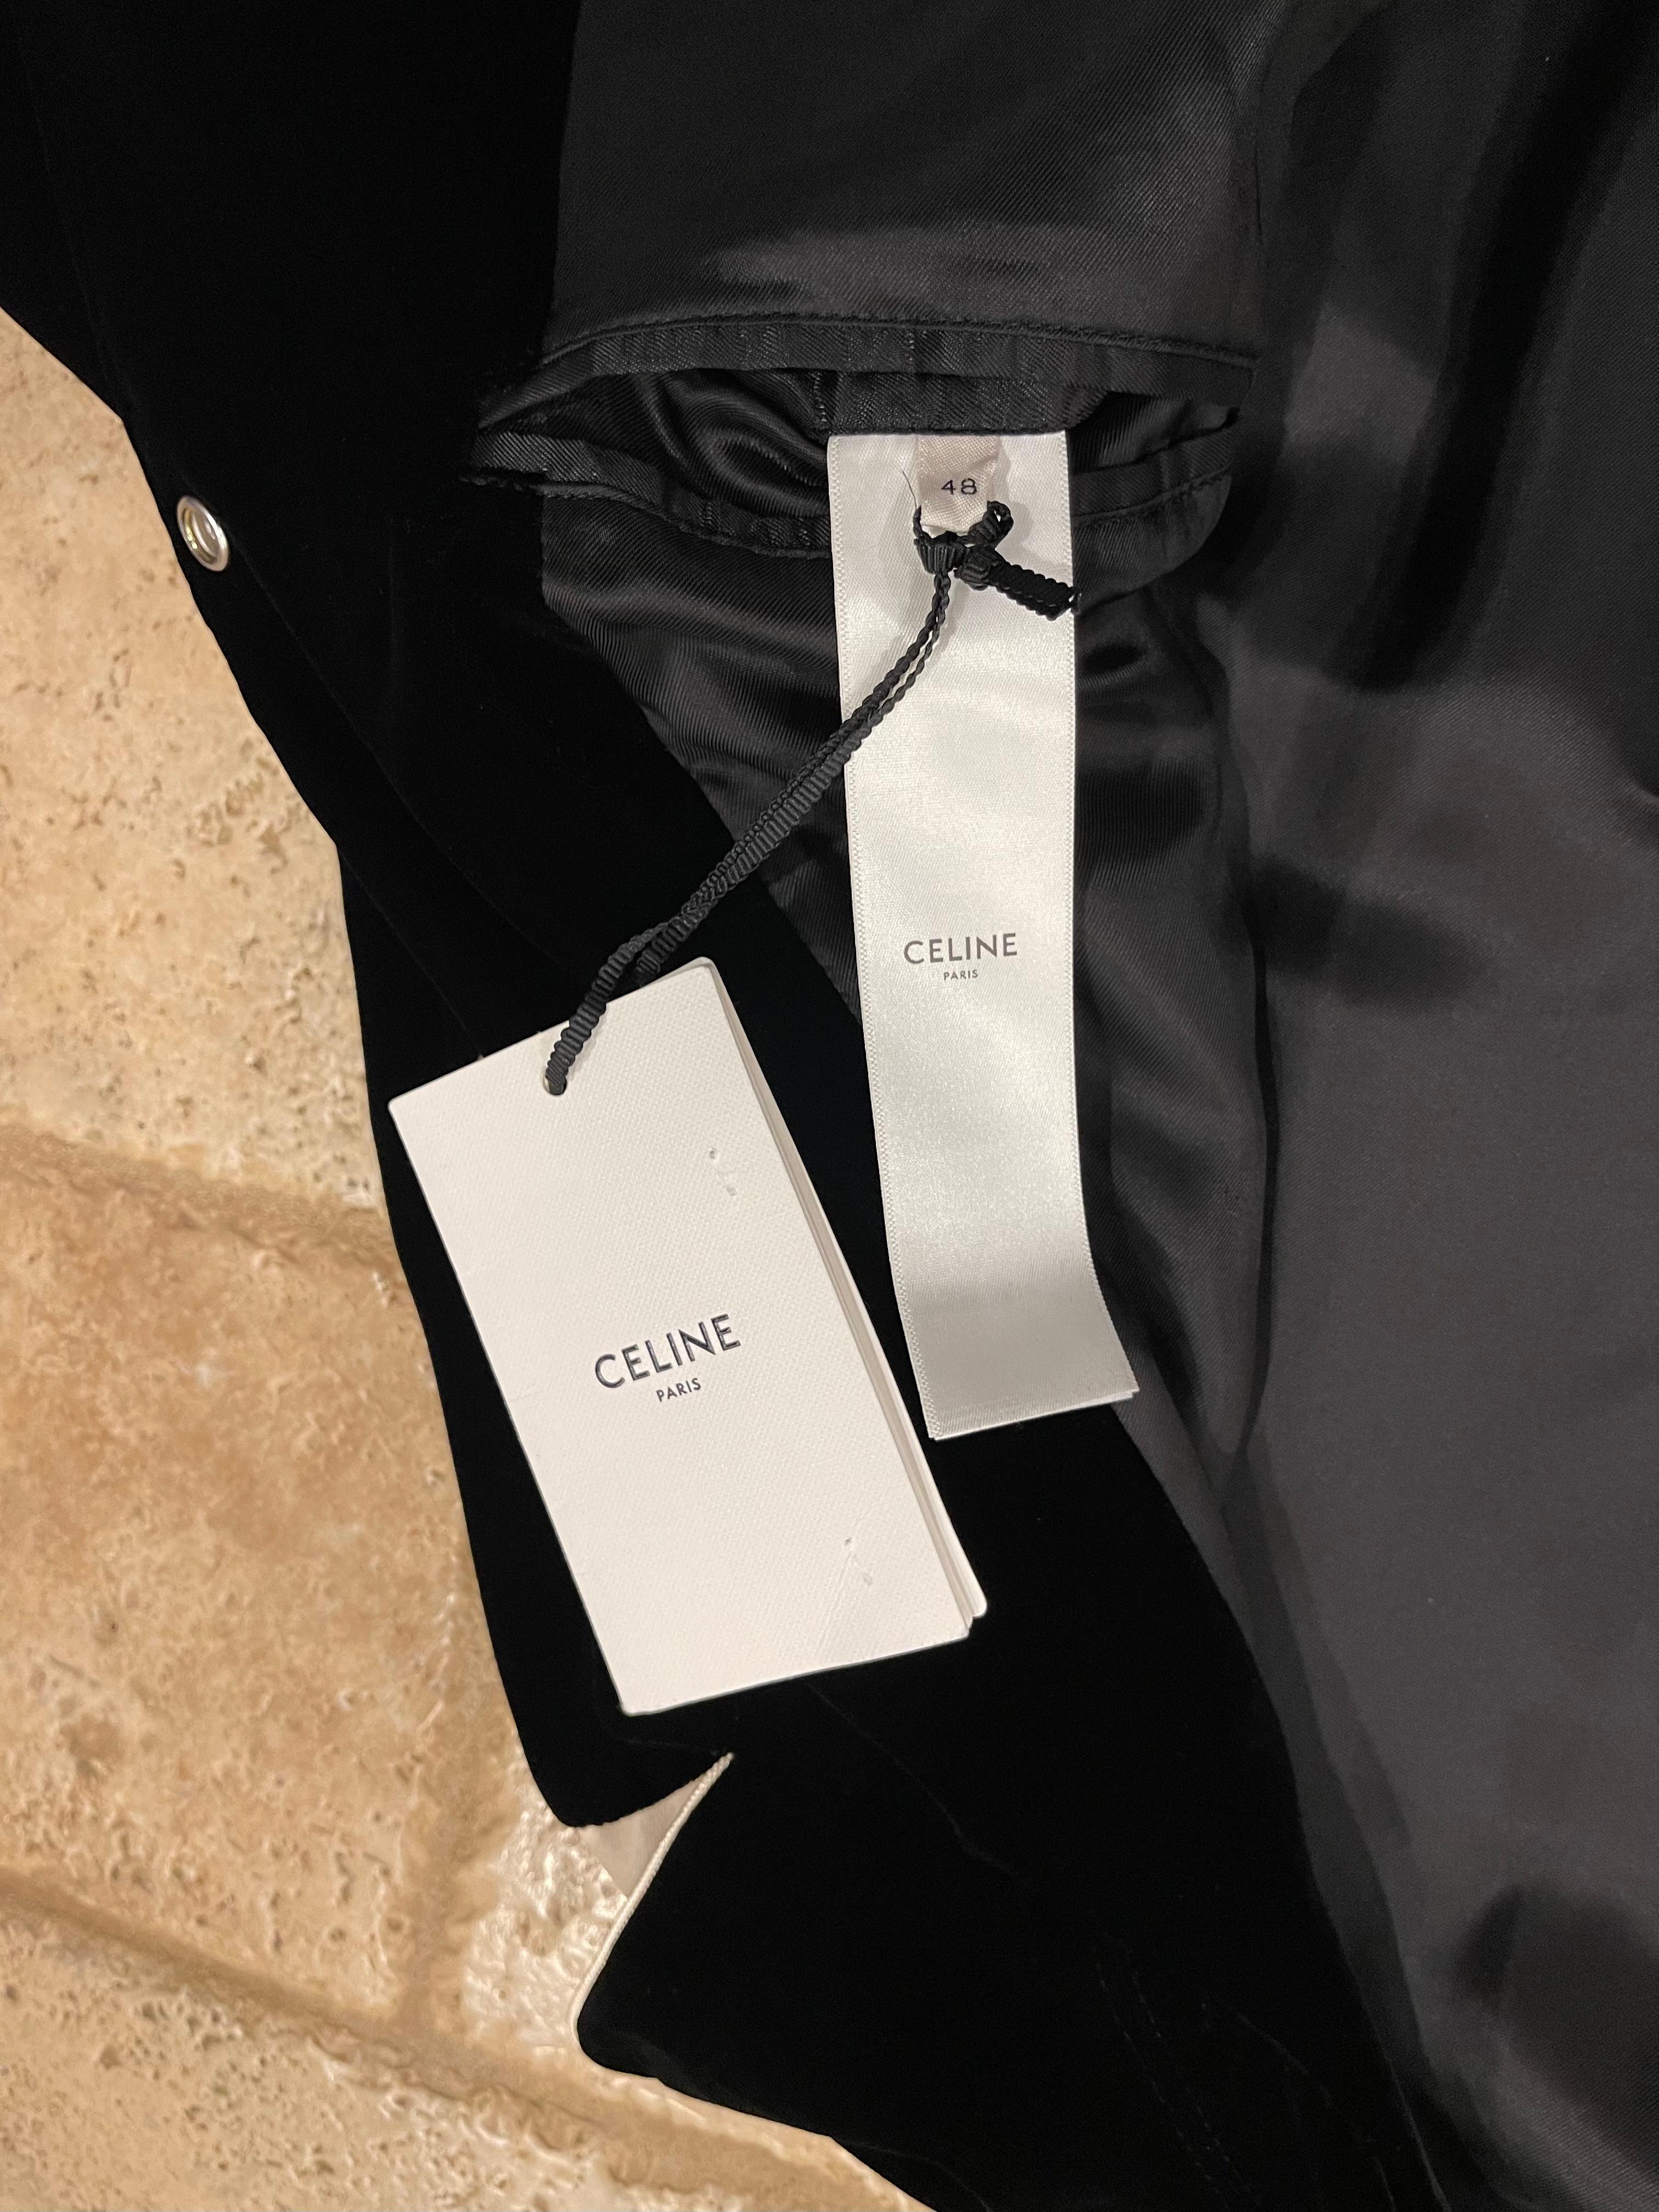 Celine Hedi Slimane Black Velvet Teddy Varsity Jacket RARE size 48 For Sale 9